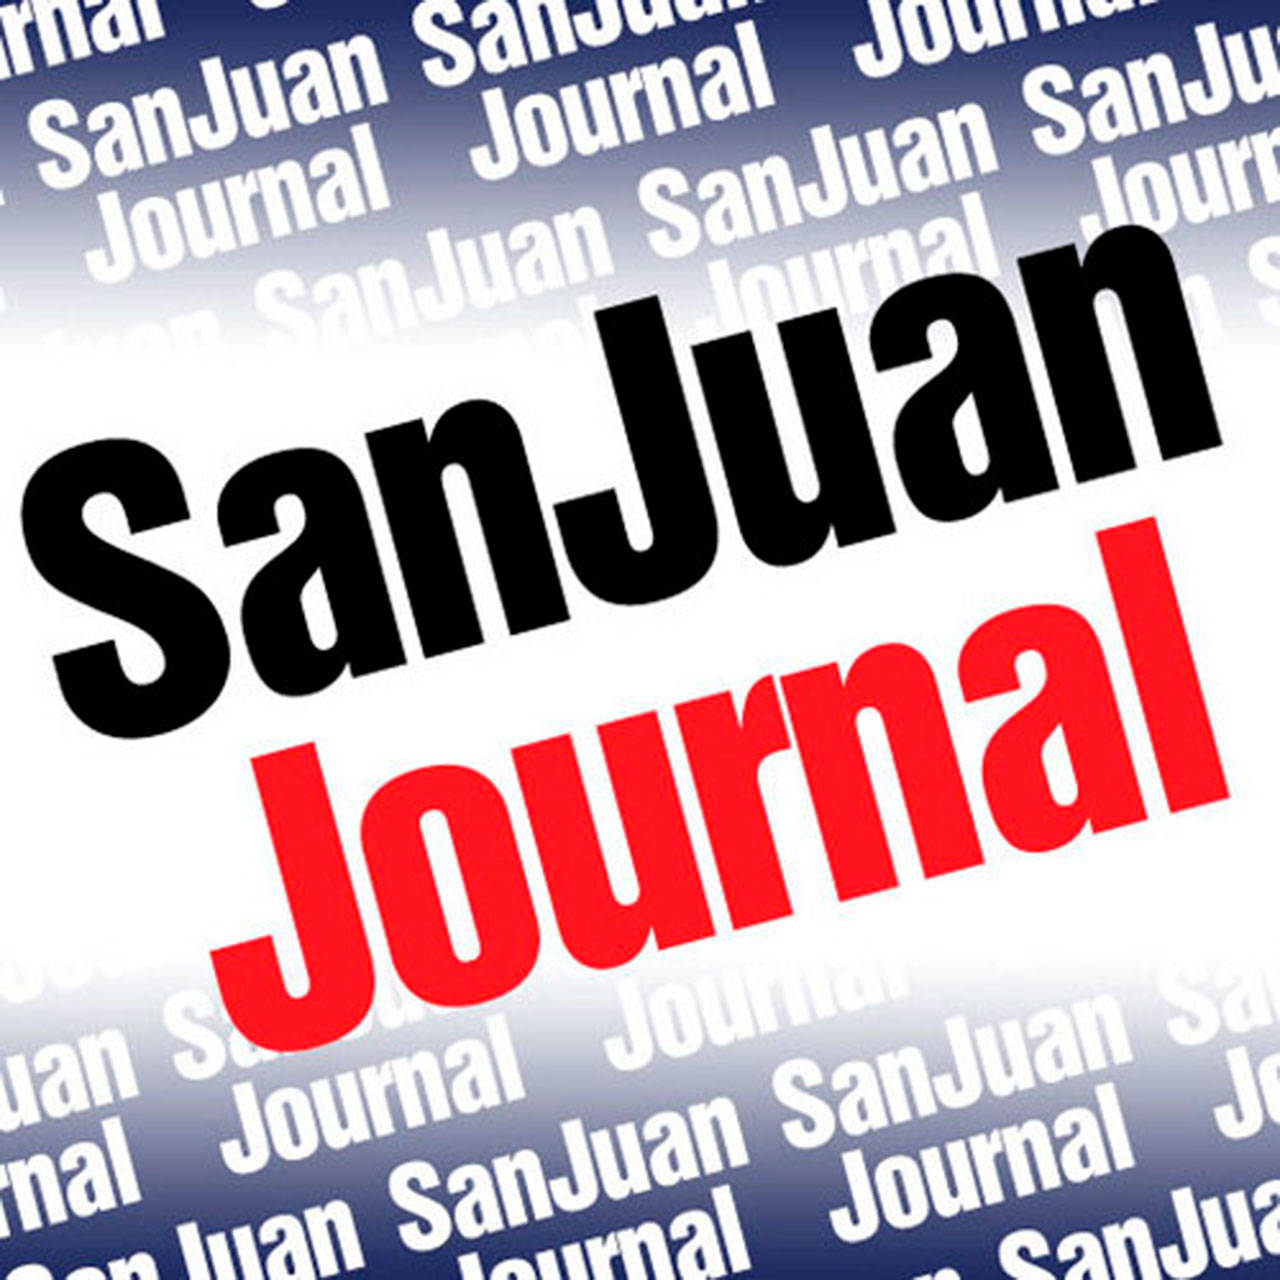 Many ways to savor the San Juans | Editorial